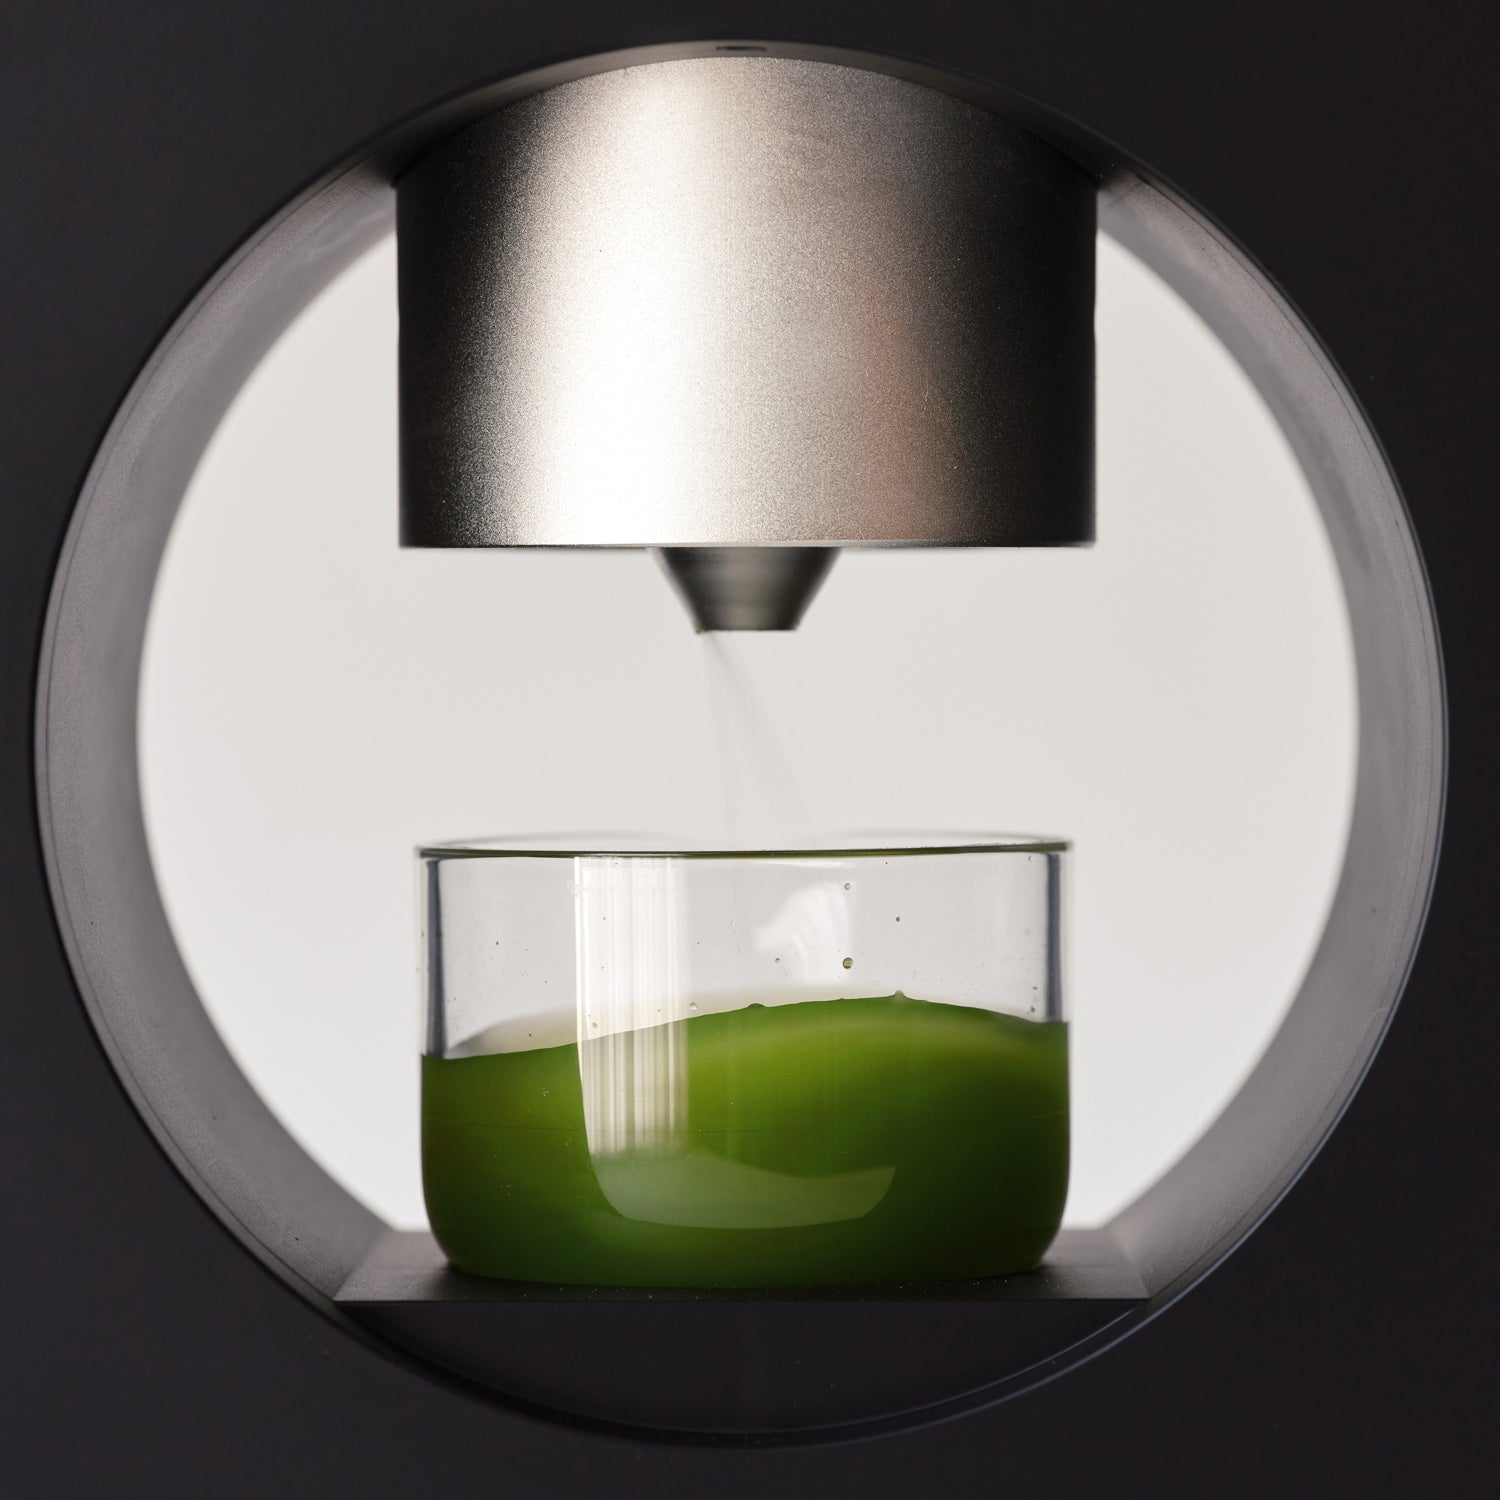 Cuzen matcha maker review: Is the green tea machine worth it?